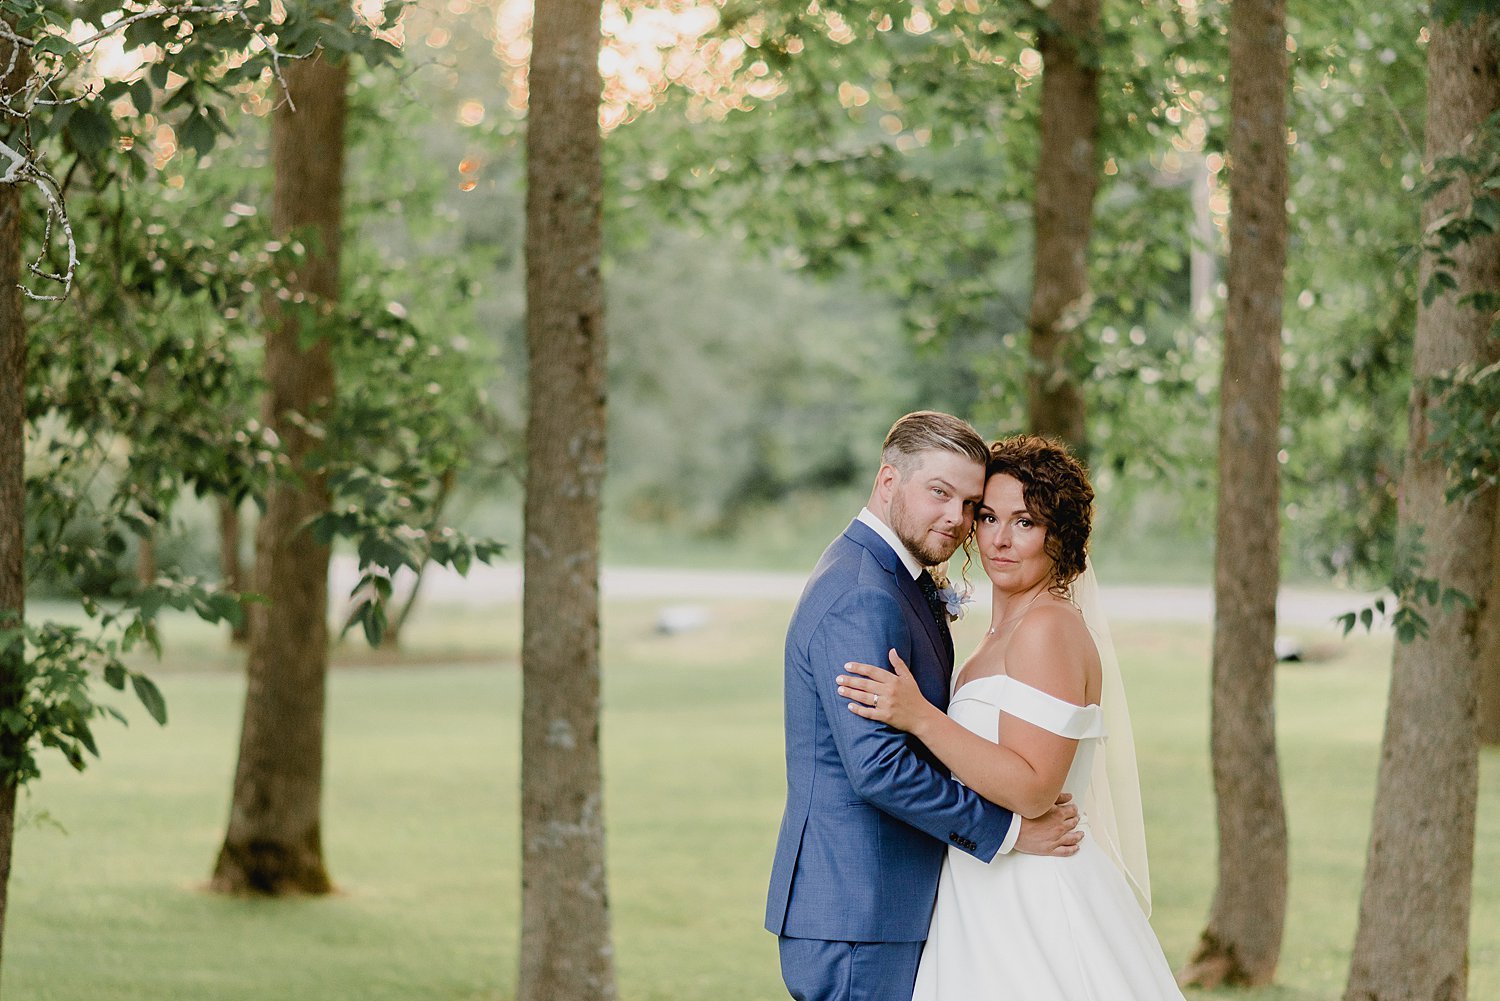 Elegant Summer Backyard Tented Wedding in Sydenham, Ontario | Prince Edward County Wedding Photographer | Holly McMurter Photographs_0094.jpg